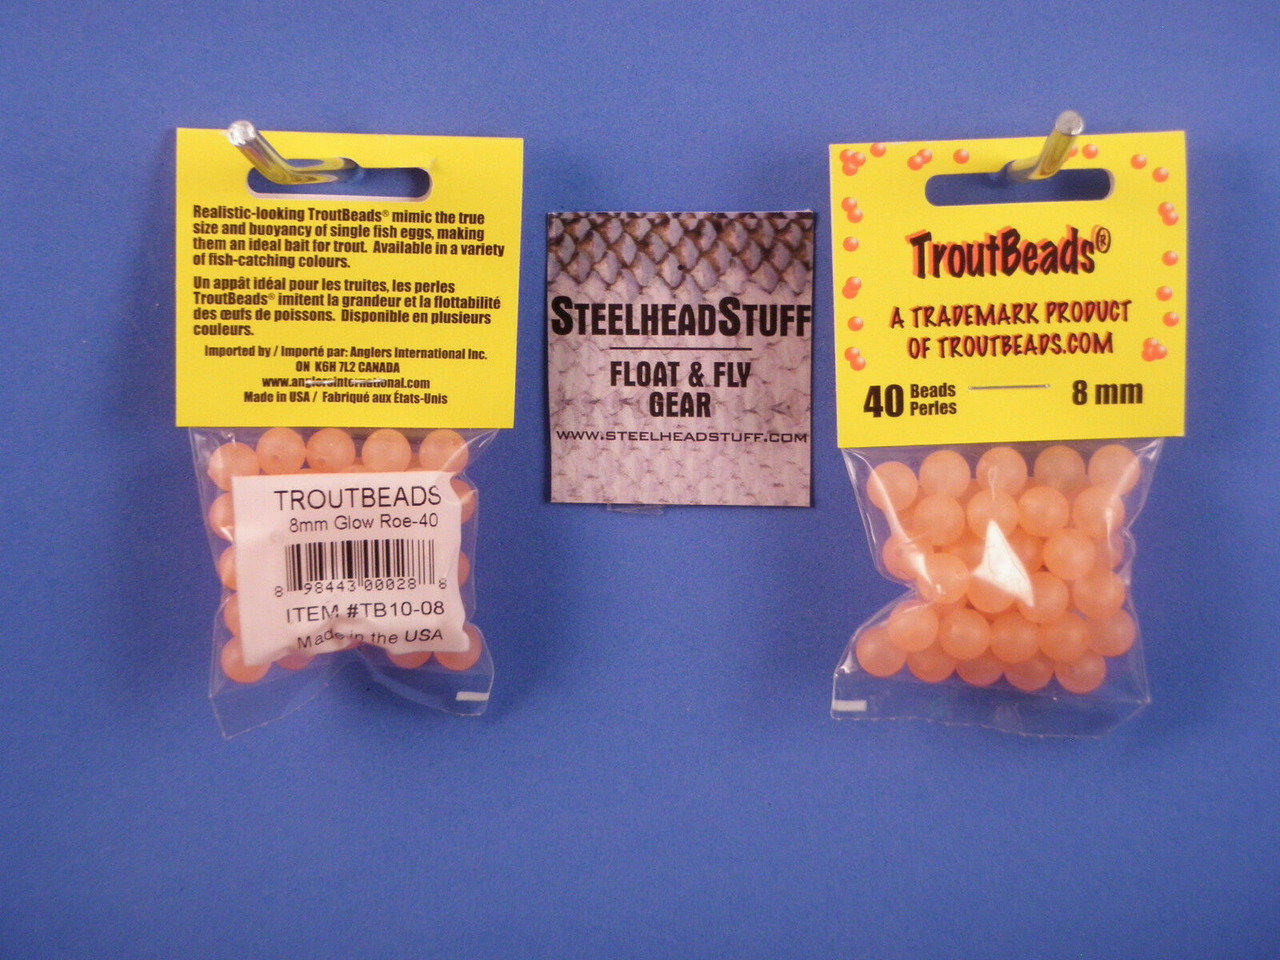 One Pack of 6mm-14mm steelhead Glow Roe trout Fishing beads -  SteelheadStuff Float and Fly Gear